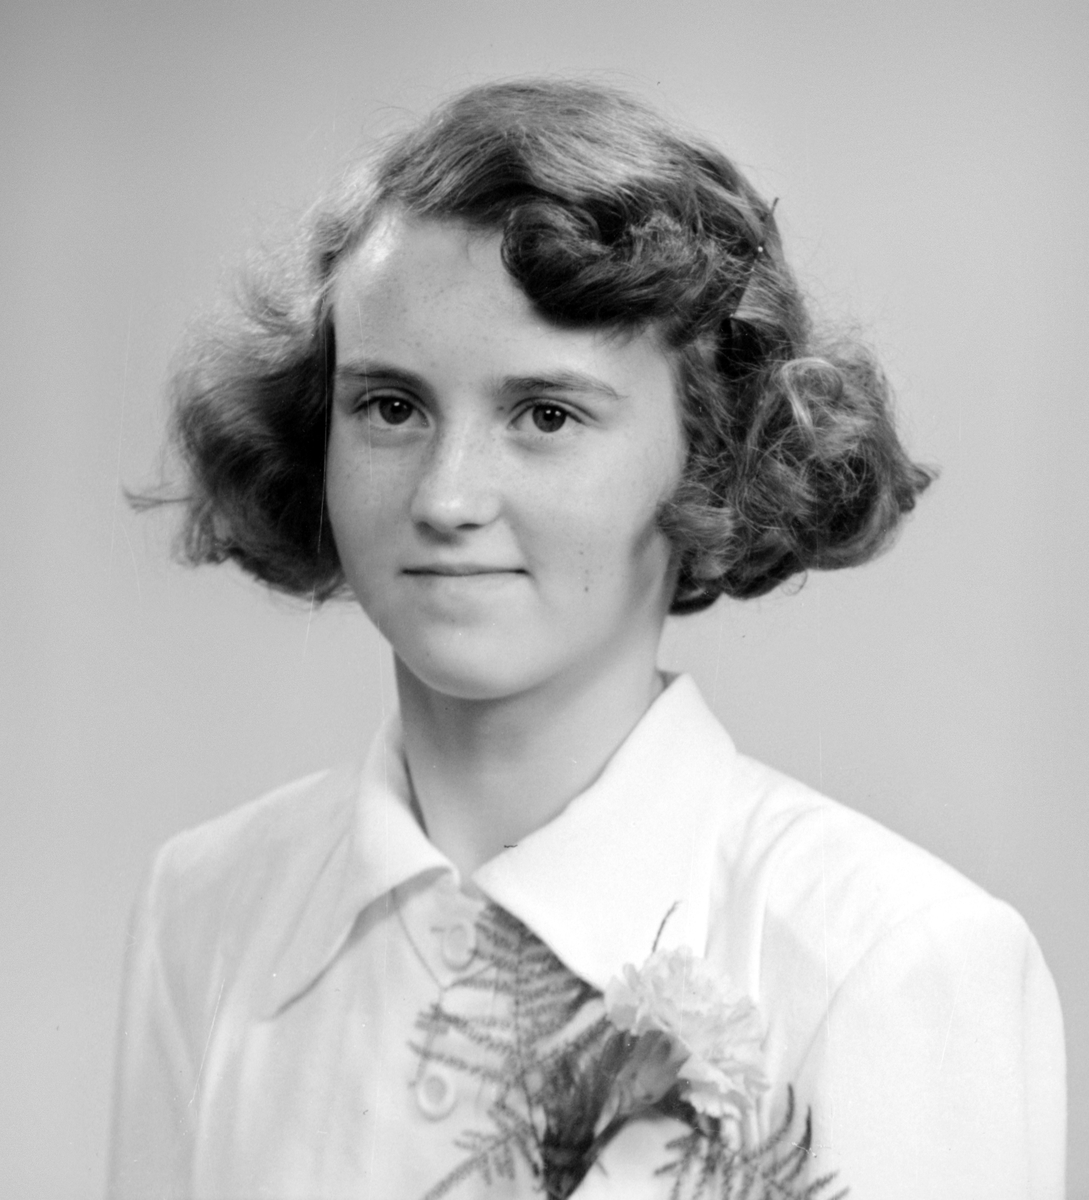 Konfirmanden Ingrid Håkansson (?). Foto i maj 1950.
